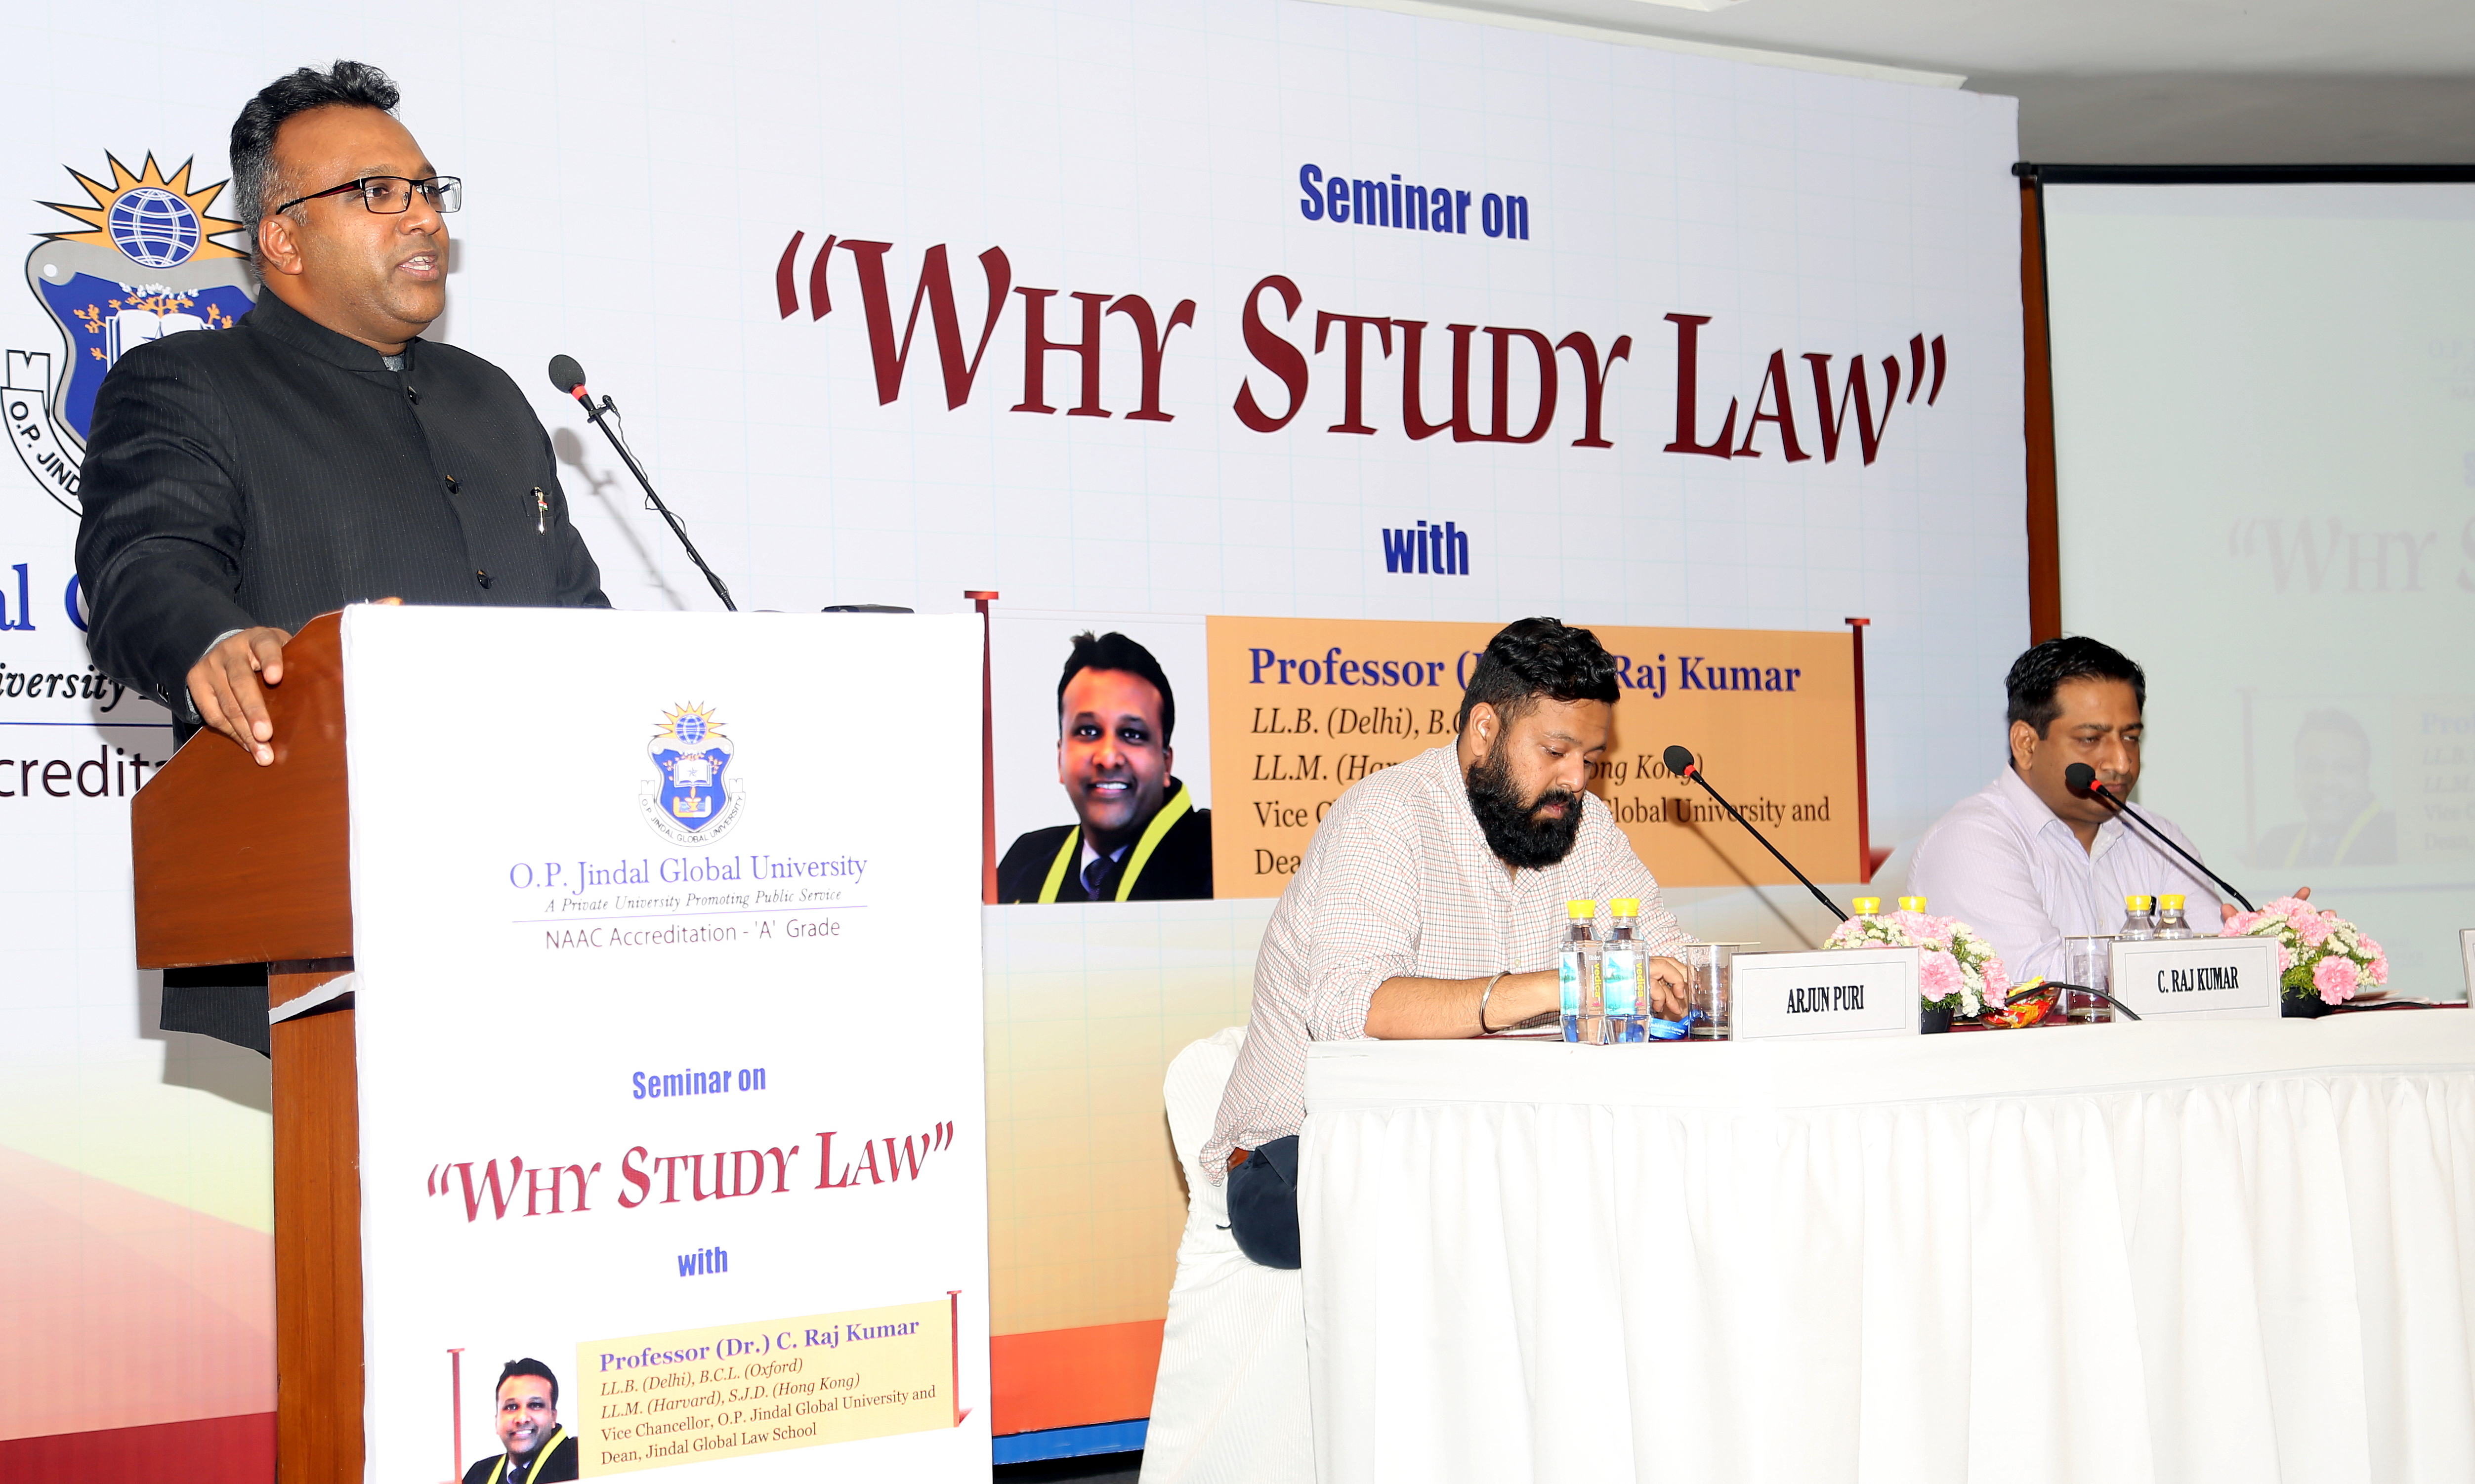 “Diversification of Legal Profession Opens Range of Career Options for Law Students”, Says Prof C Raj Kumar, Vice Chancellor, O. P. Jindal Global University (JGU)